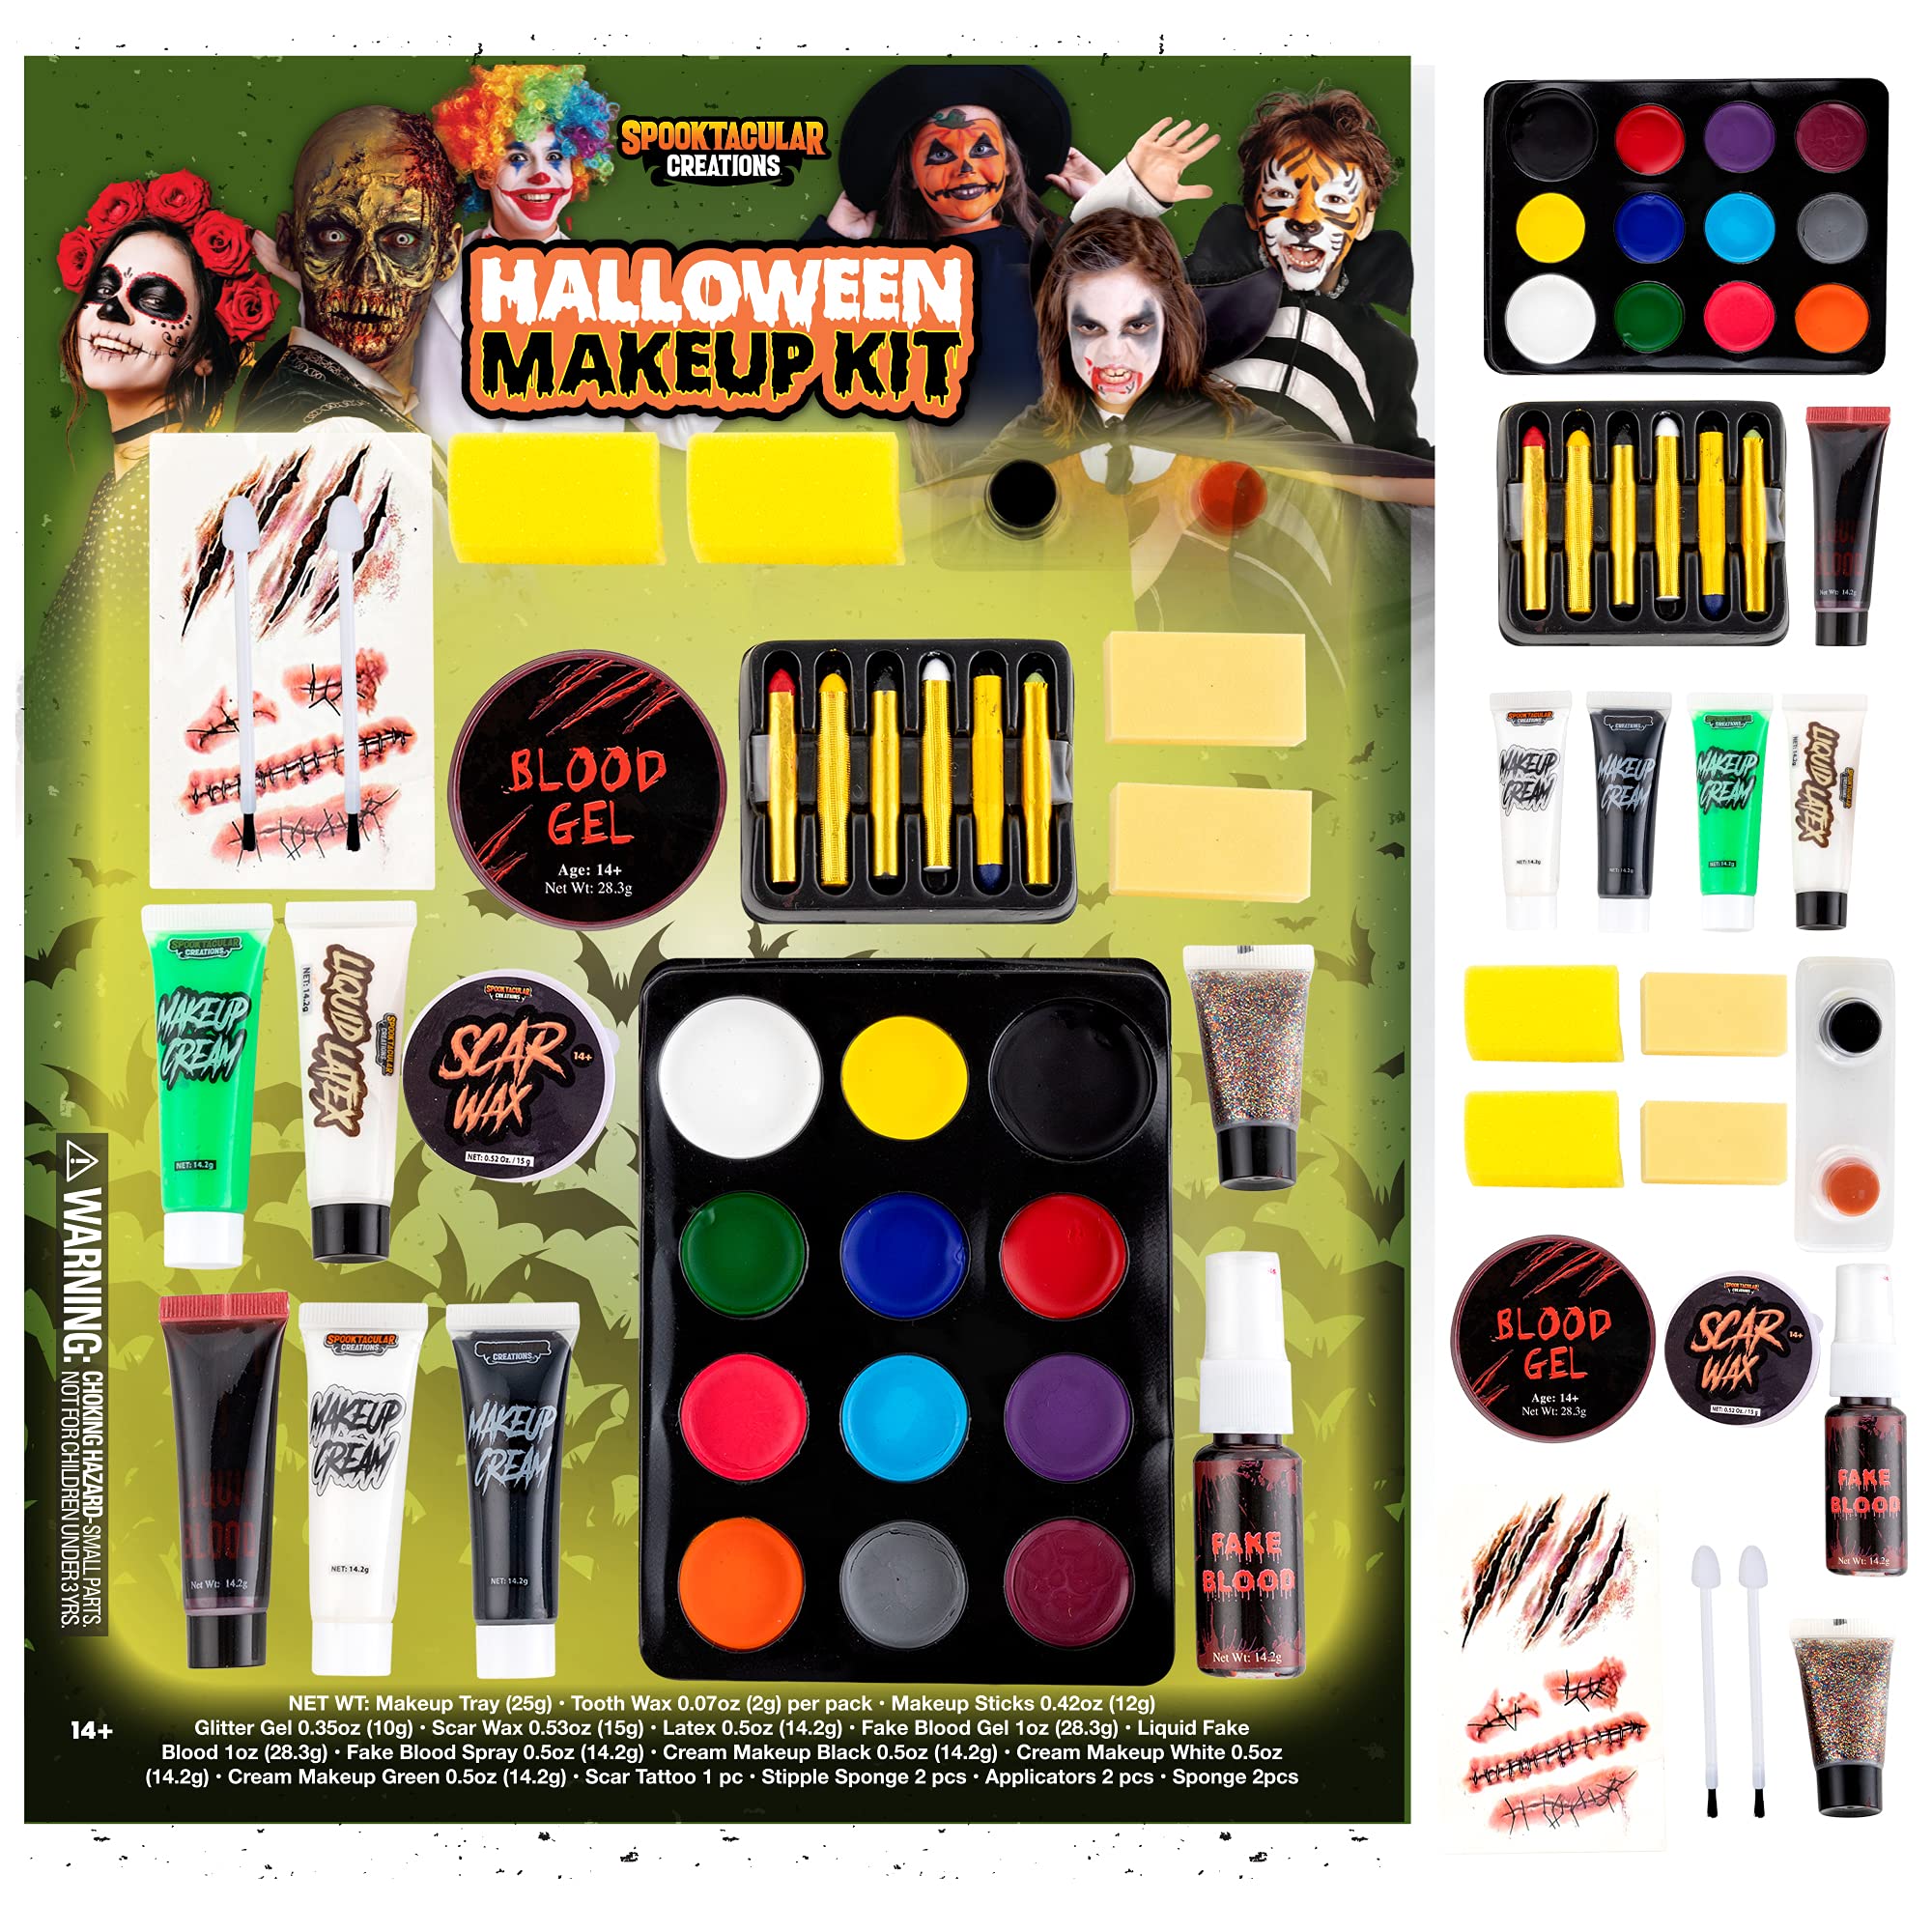 10 Special FX Halloween Makeup Kits Tips Ideas! - Freebies Deals & Steals